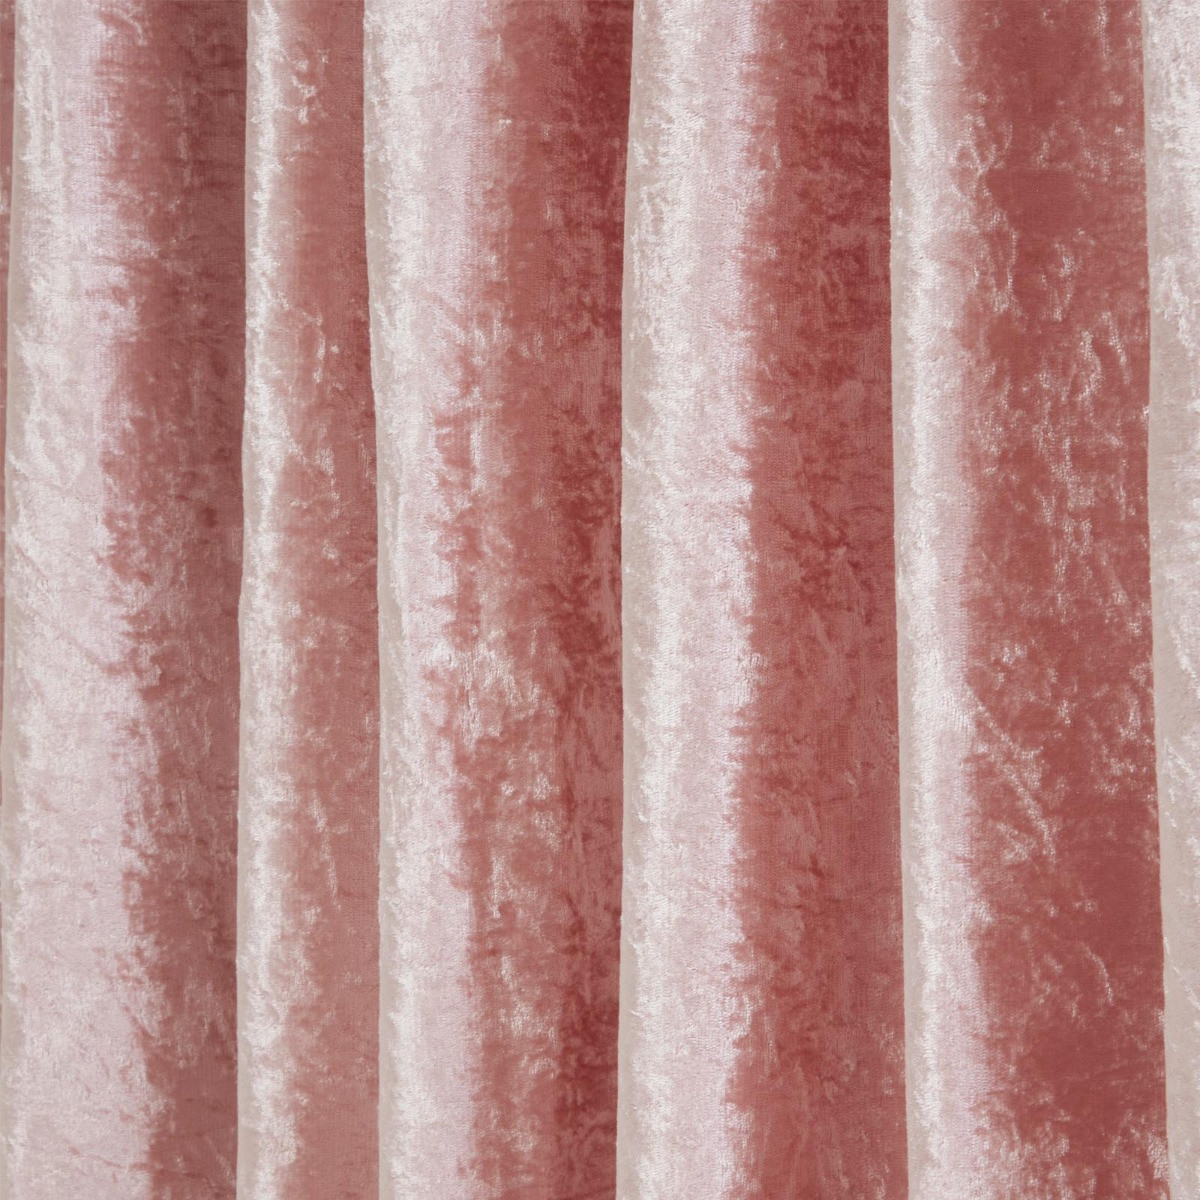 Sienna Crushed Velvet Pencil Pleat Curtains - Blush Pink>